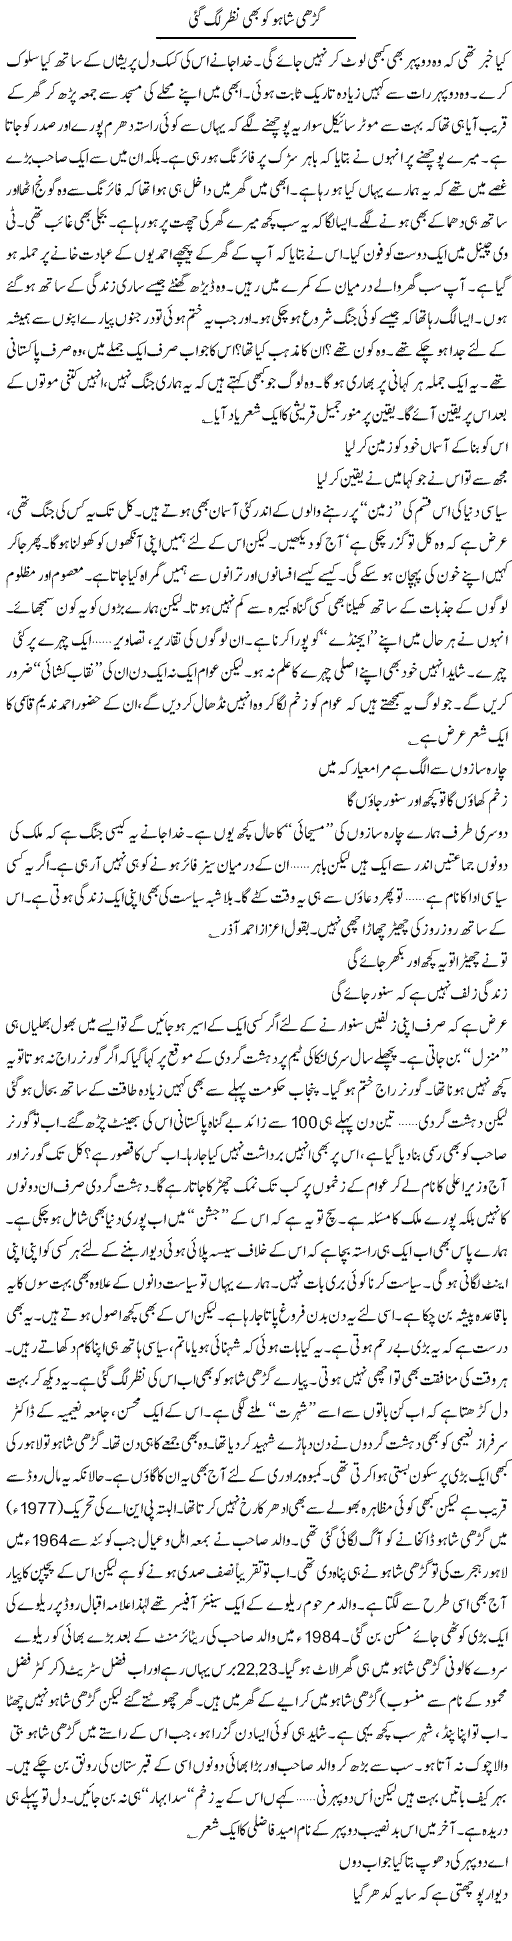 Garhi Shahu Express Column Ijaz Hafeez 31 May 2010